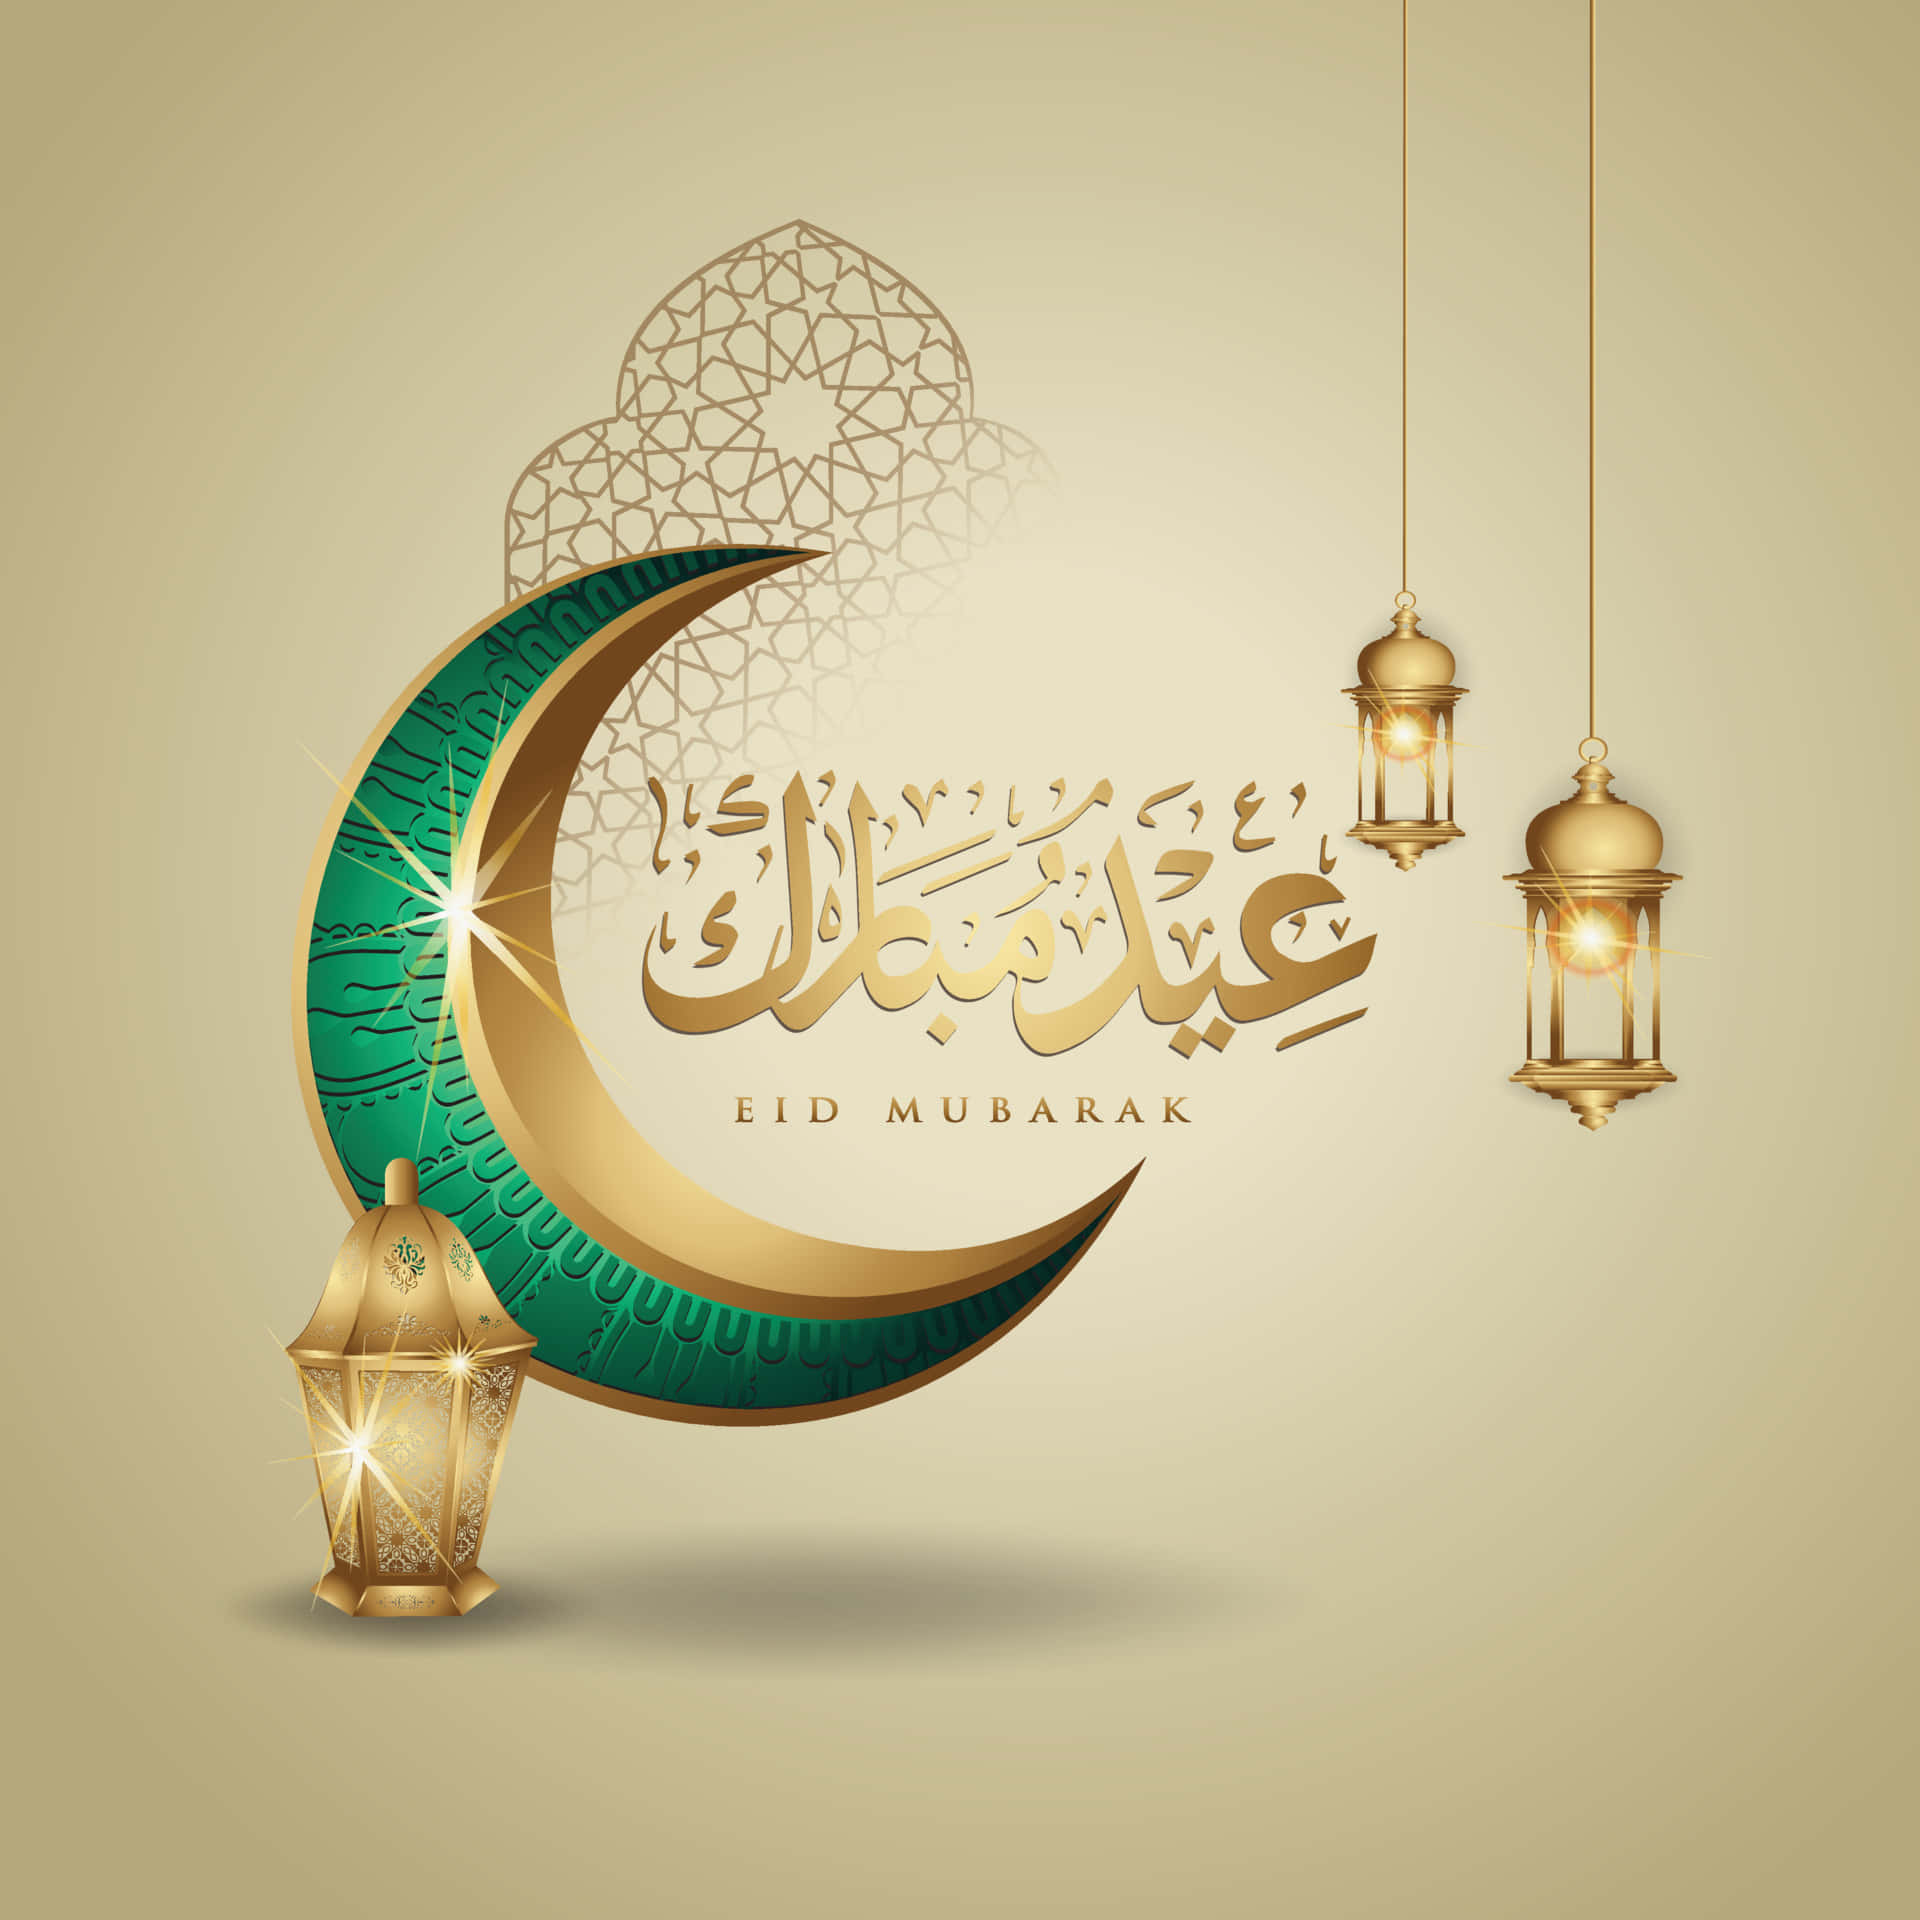 'Wishing everyone a safe, blessed and joyous Eid Mubarak!'